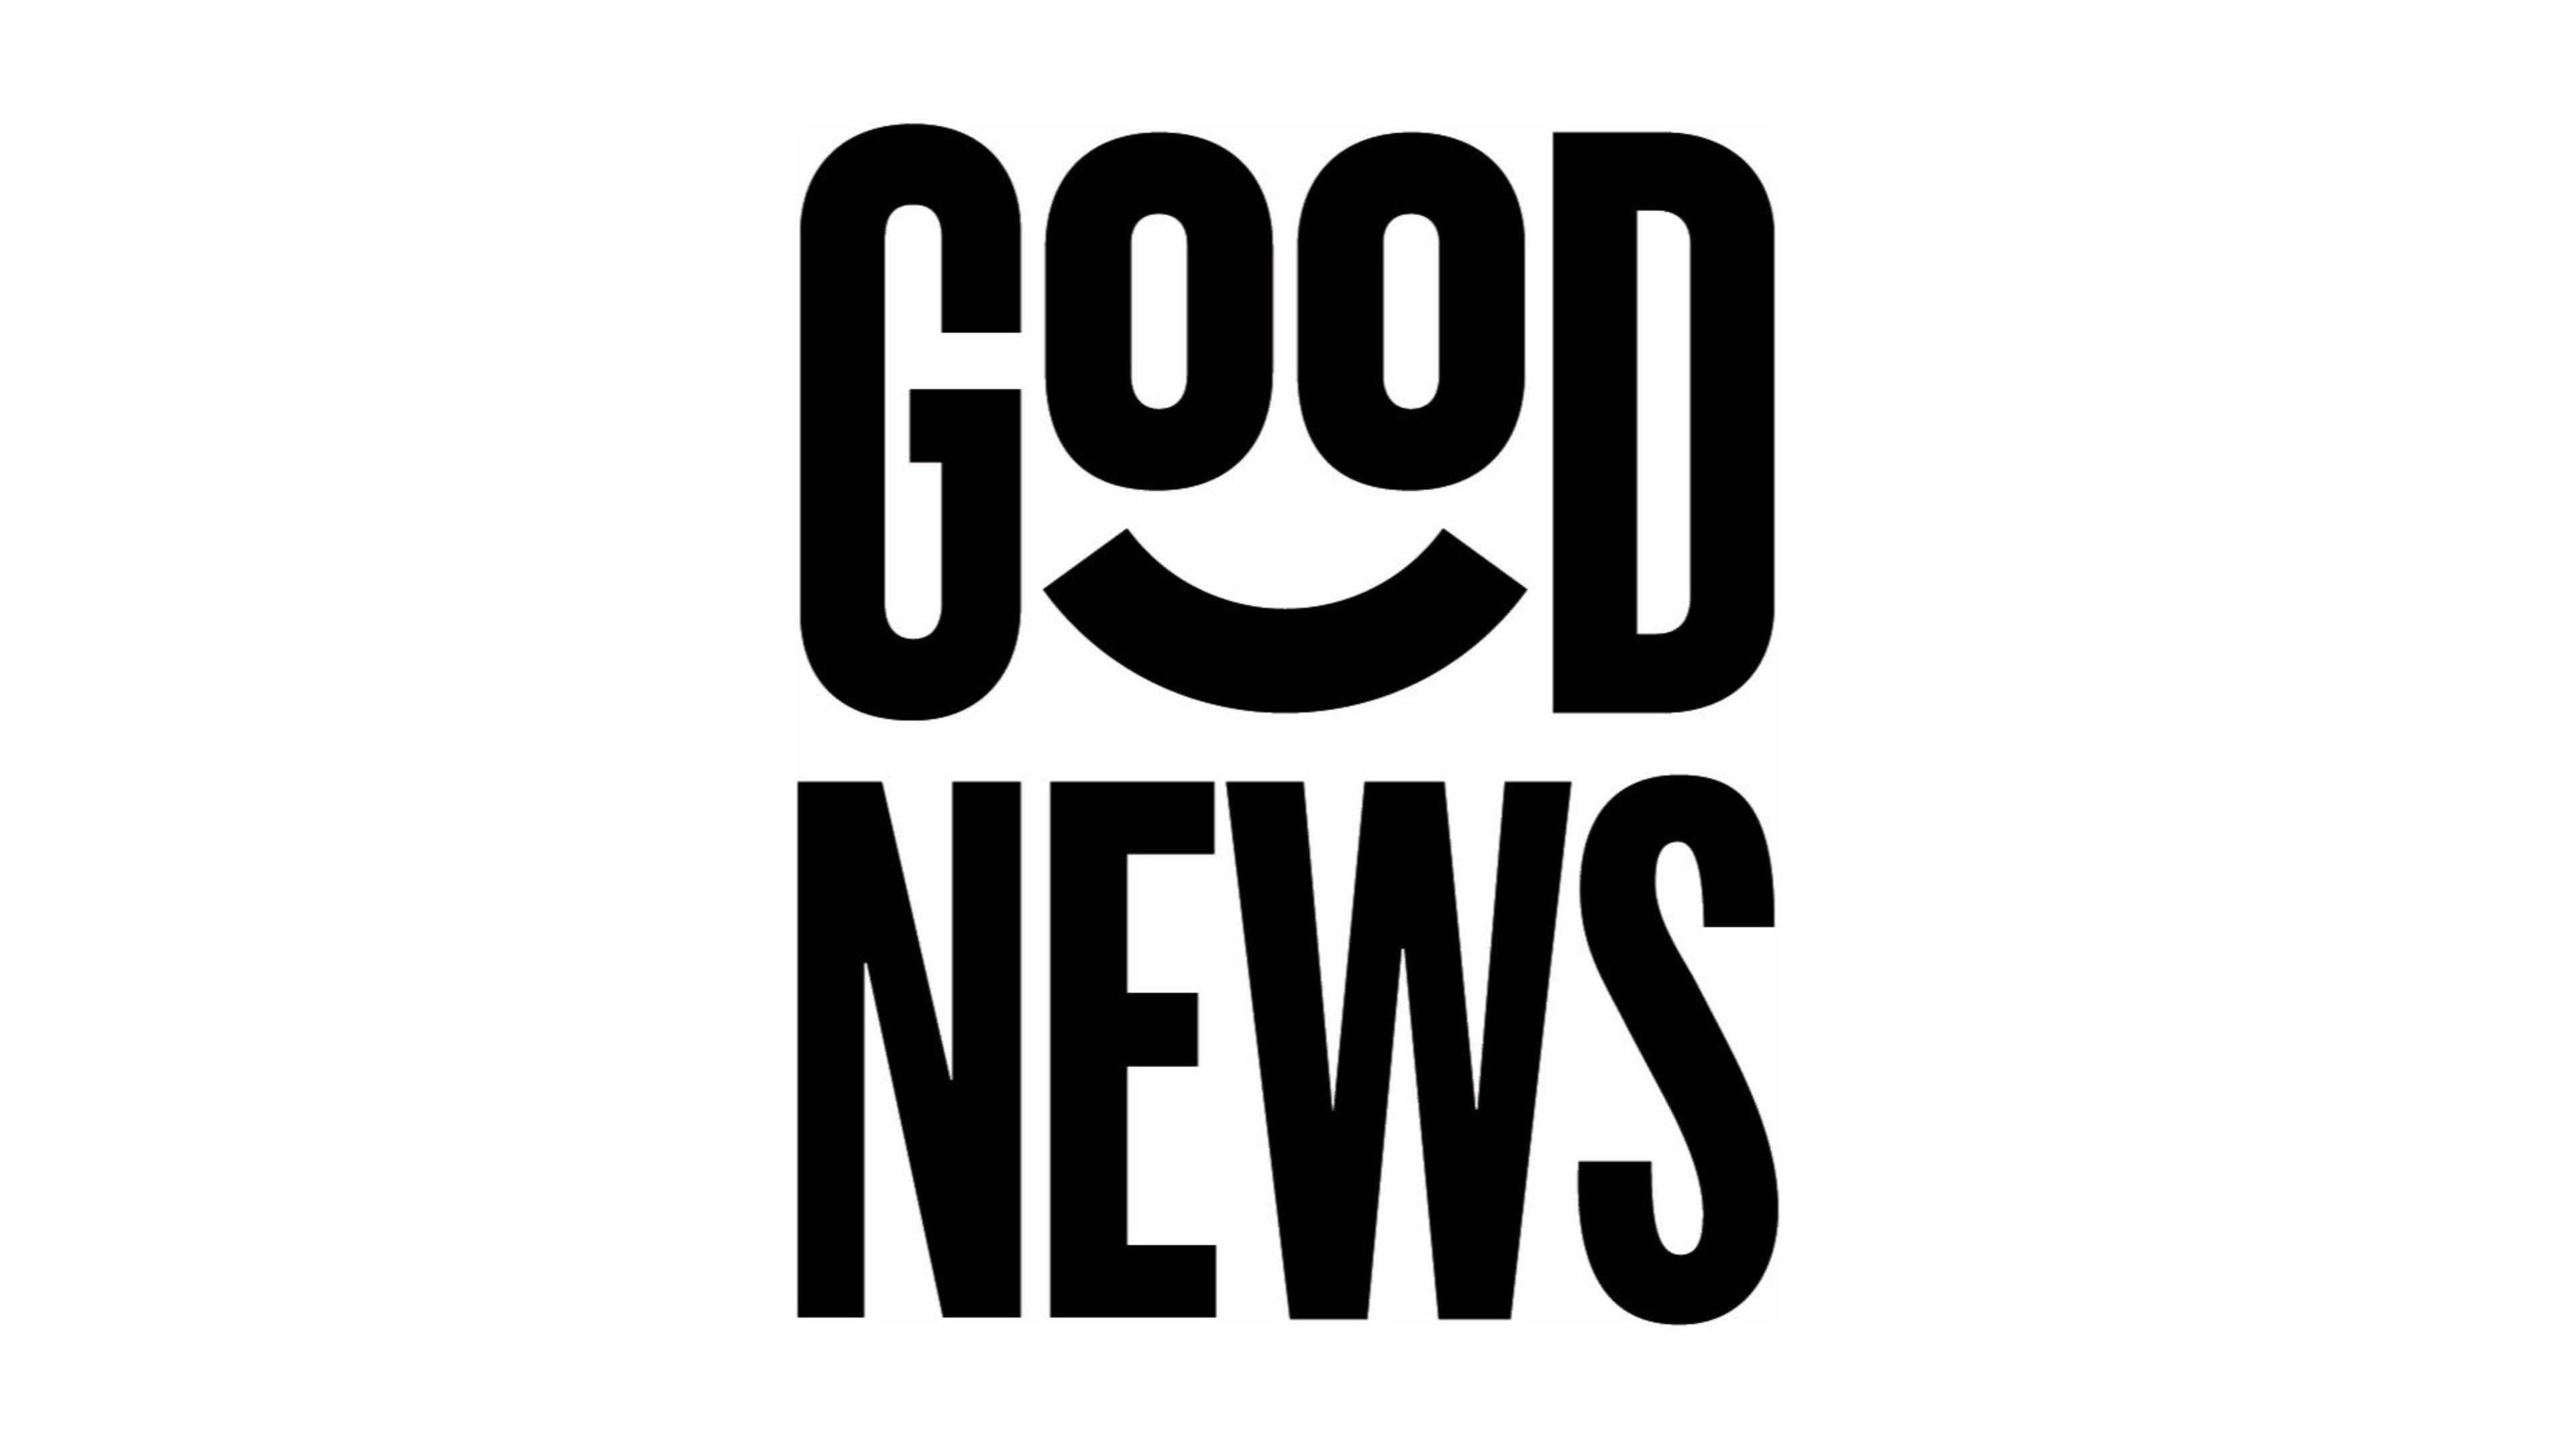 good news logo